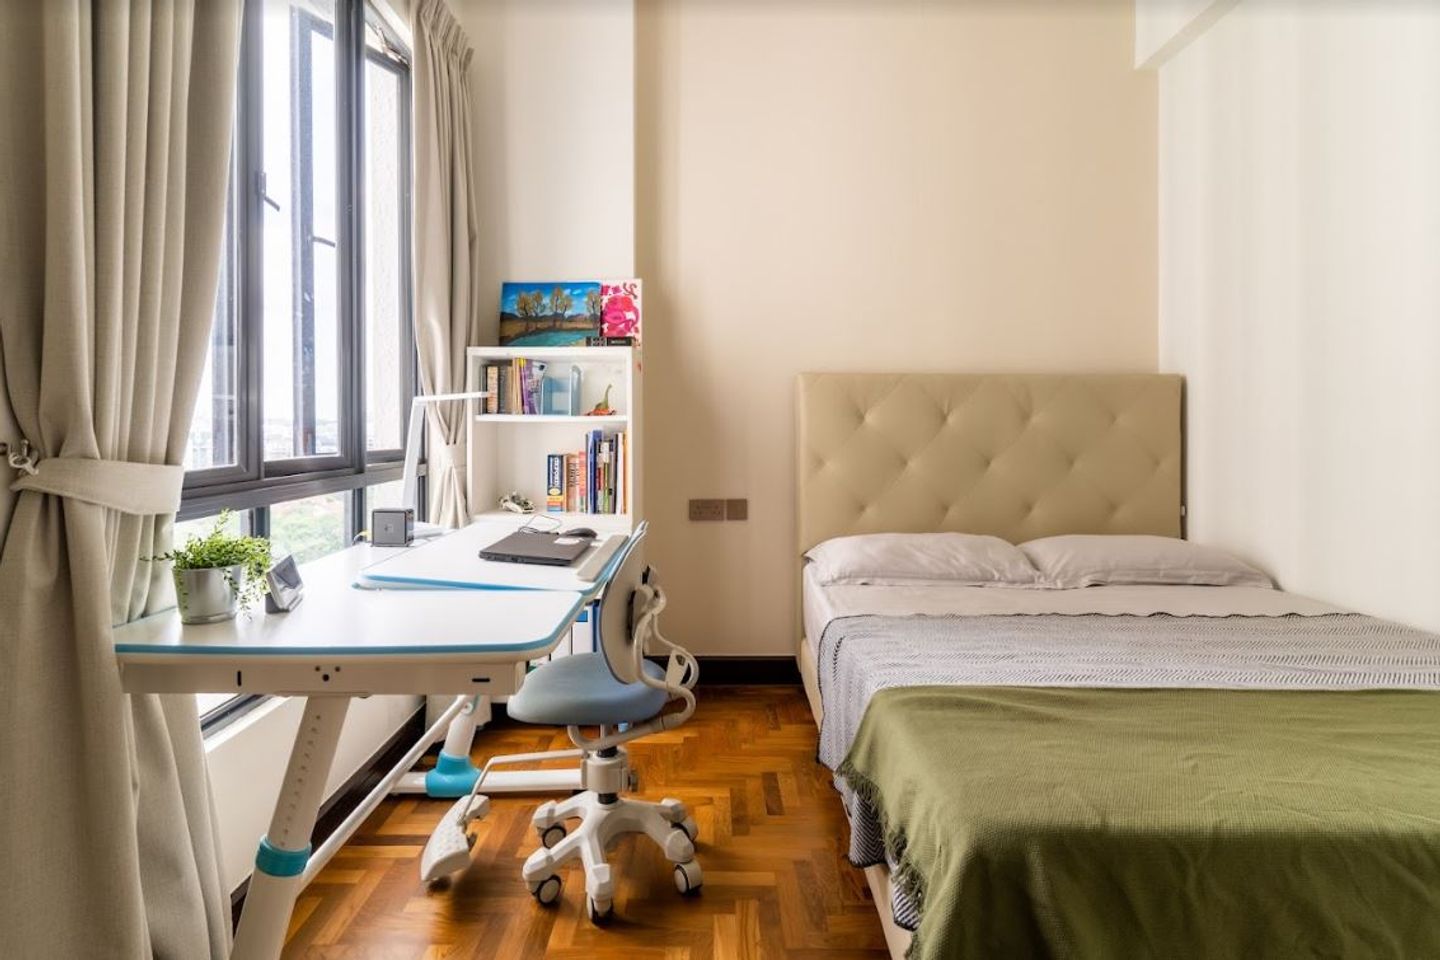 Creamy White Bedroom With A Study Setup - Livspace